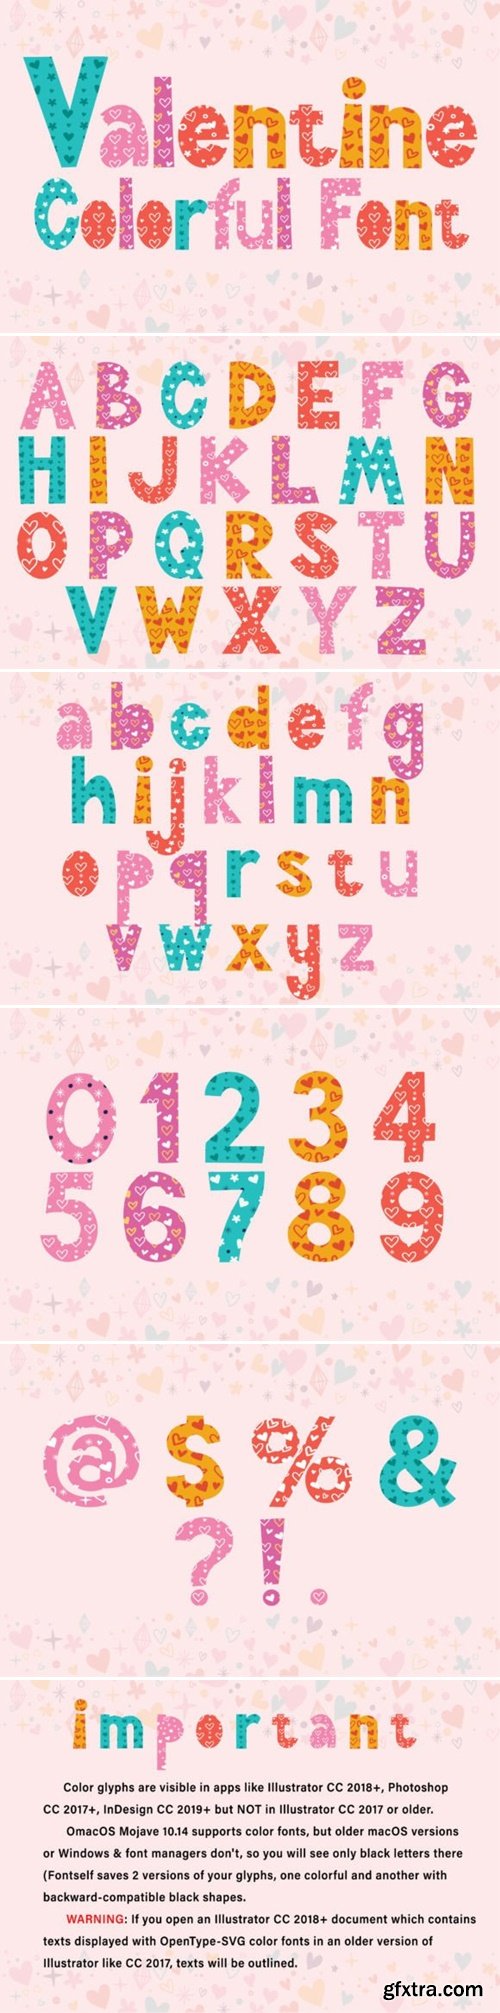 Valentine Colorful Font